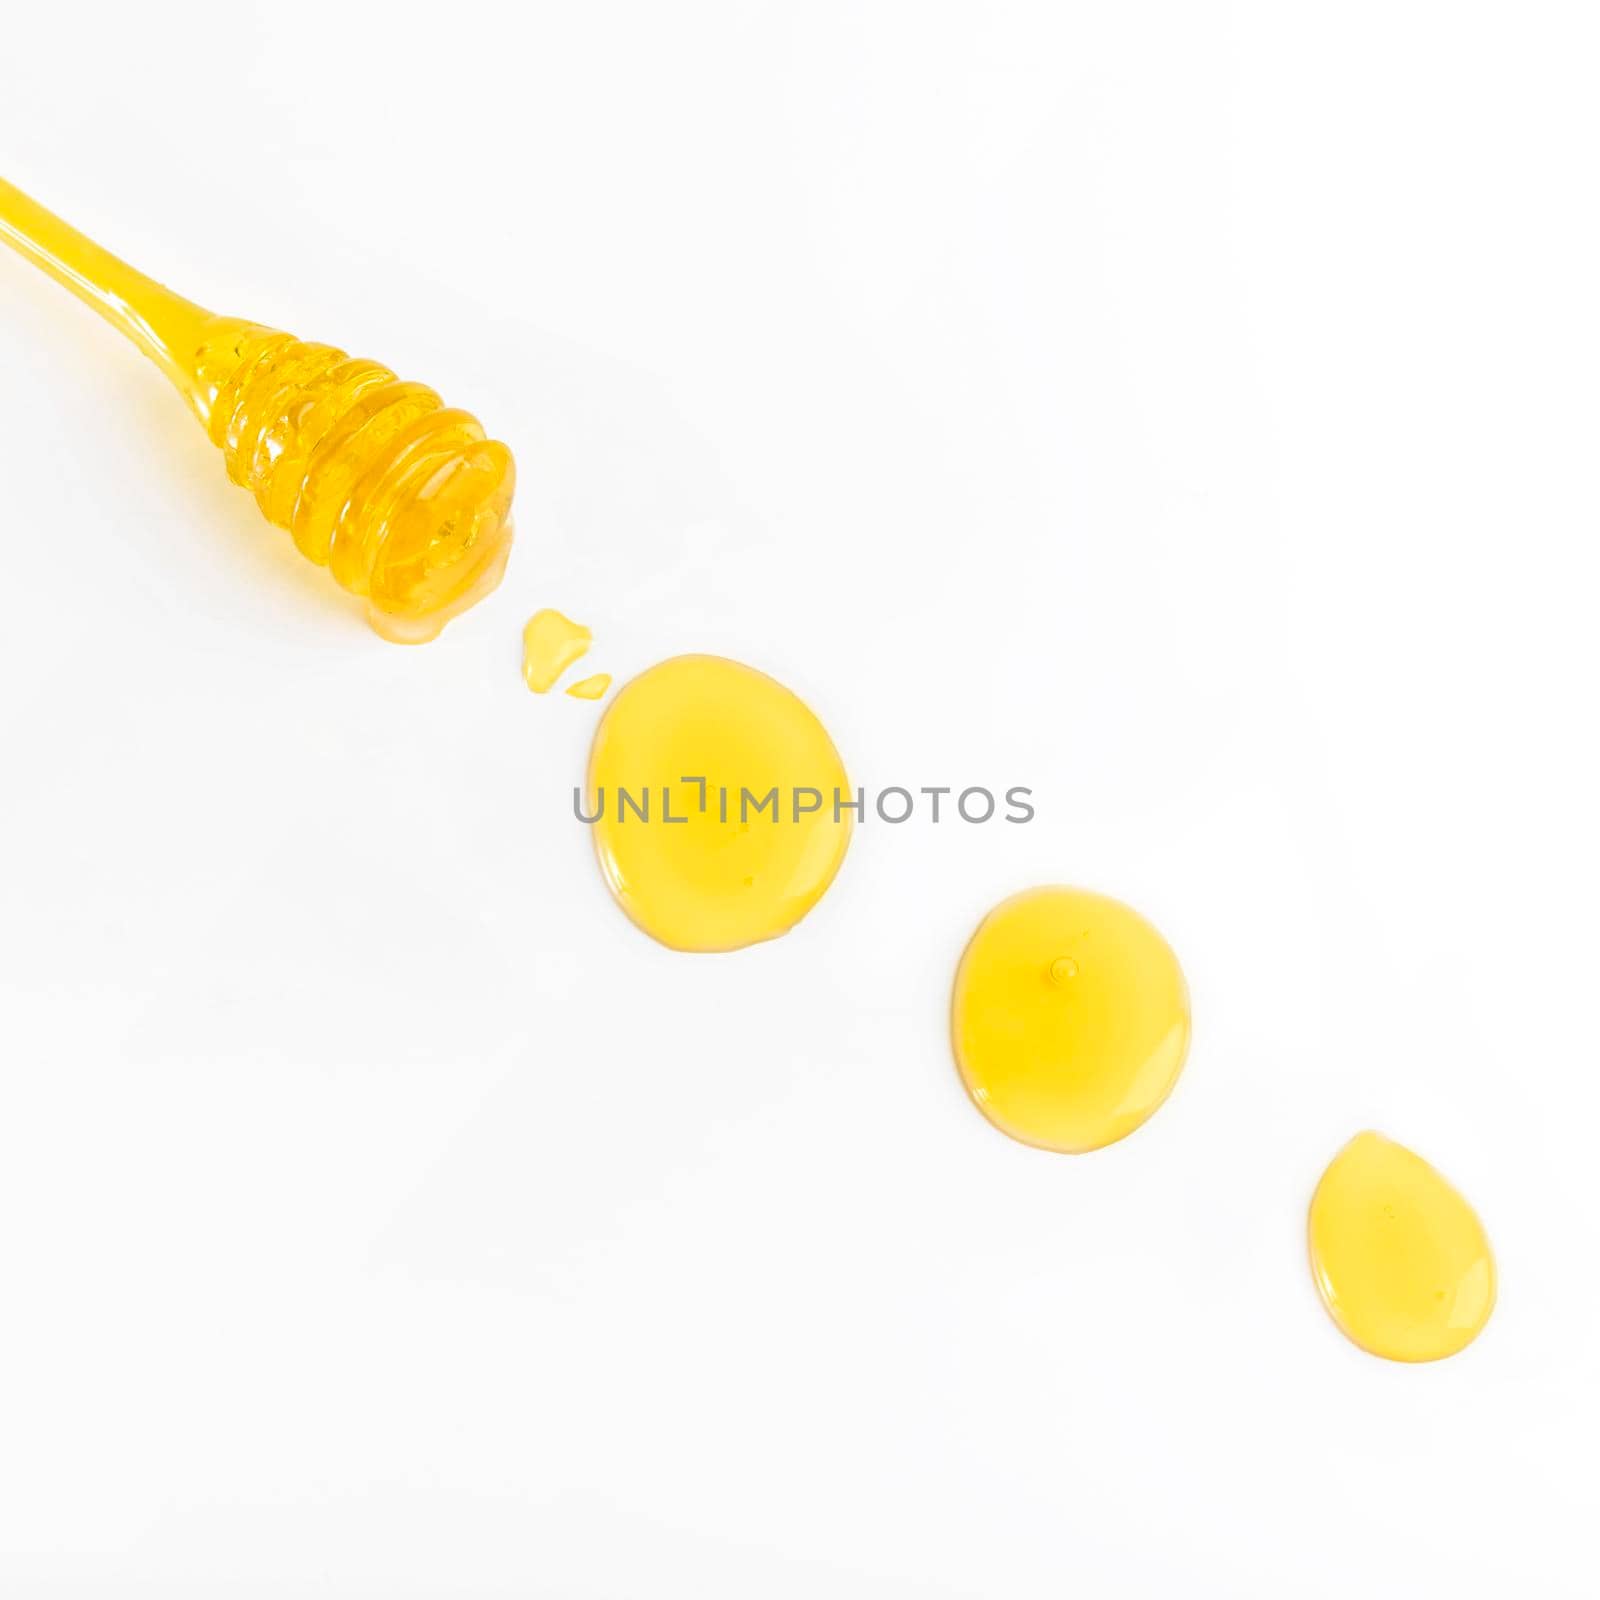 honey dipper white background. High quality photo by Zahard